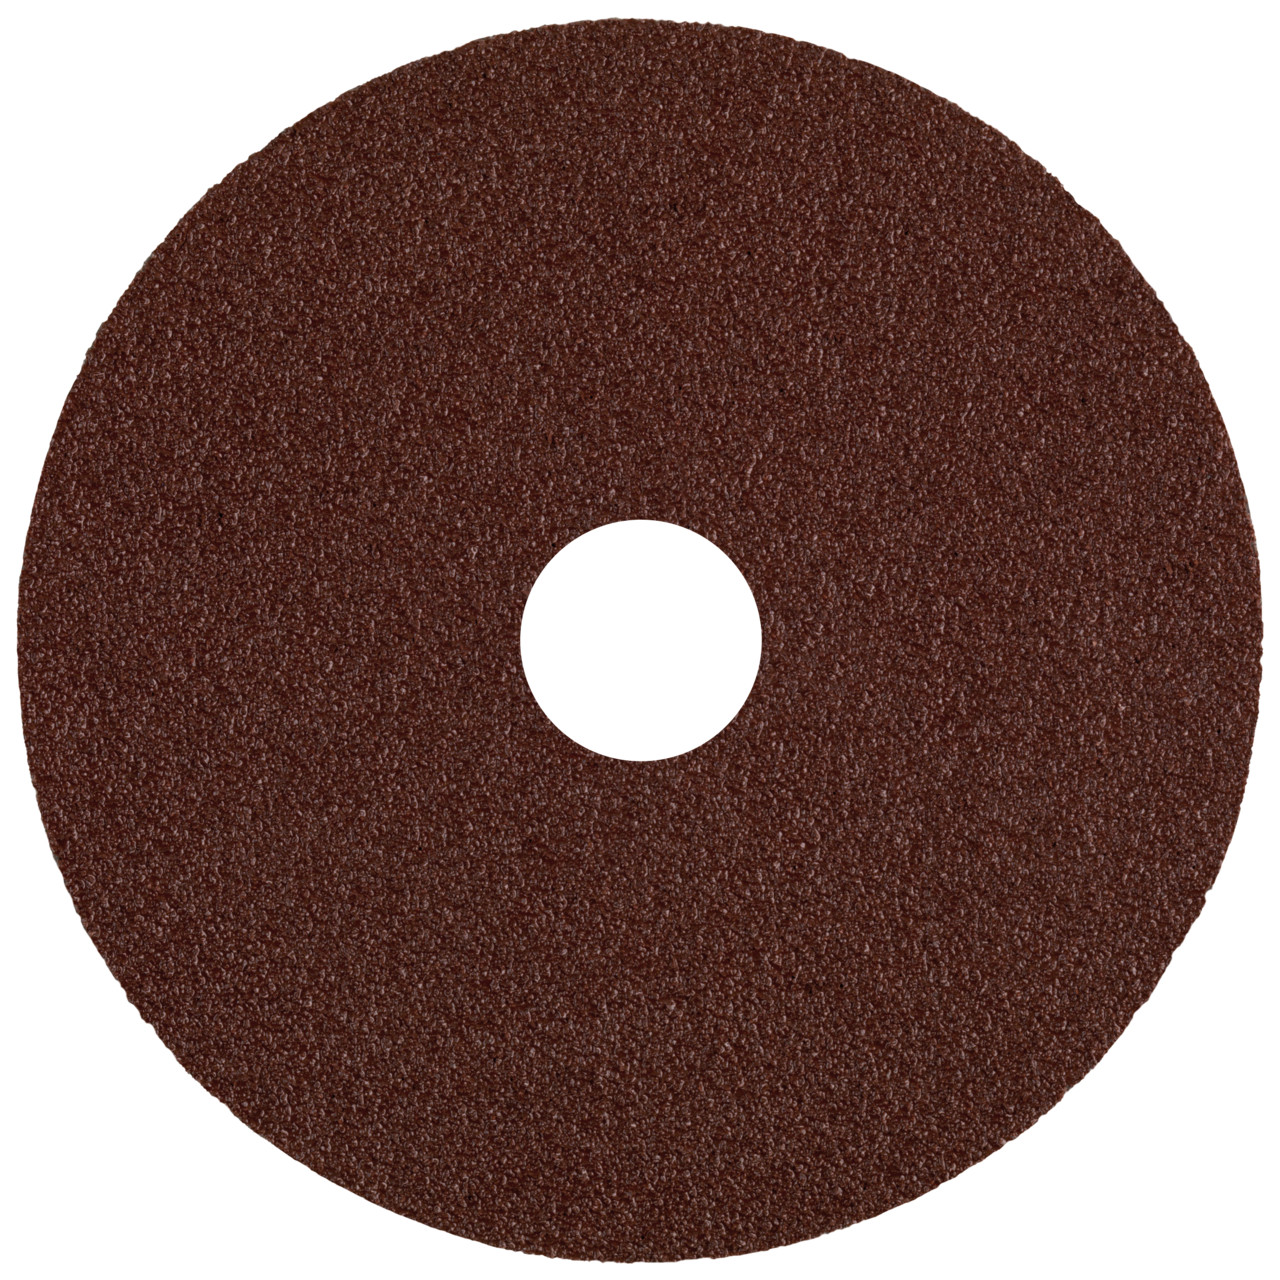 Tyrolit A-B02 V Vulcanised fibre disc DxH 180x22 For steel, non-ferrous metals and wood, P40, shape: DISC, Art. 34286509